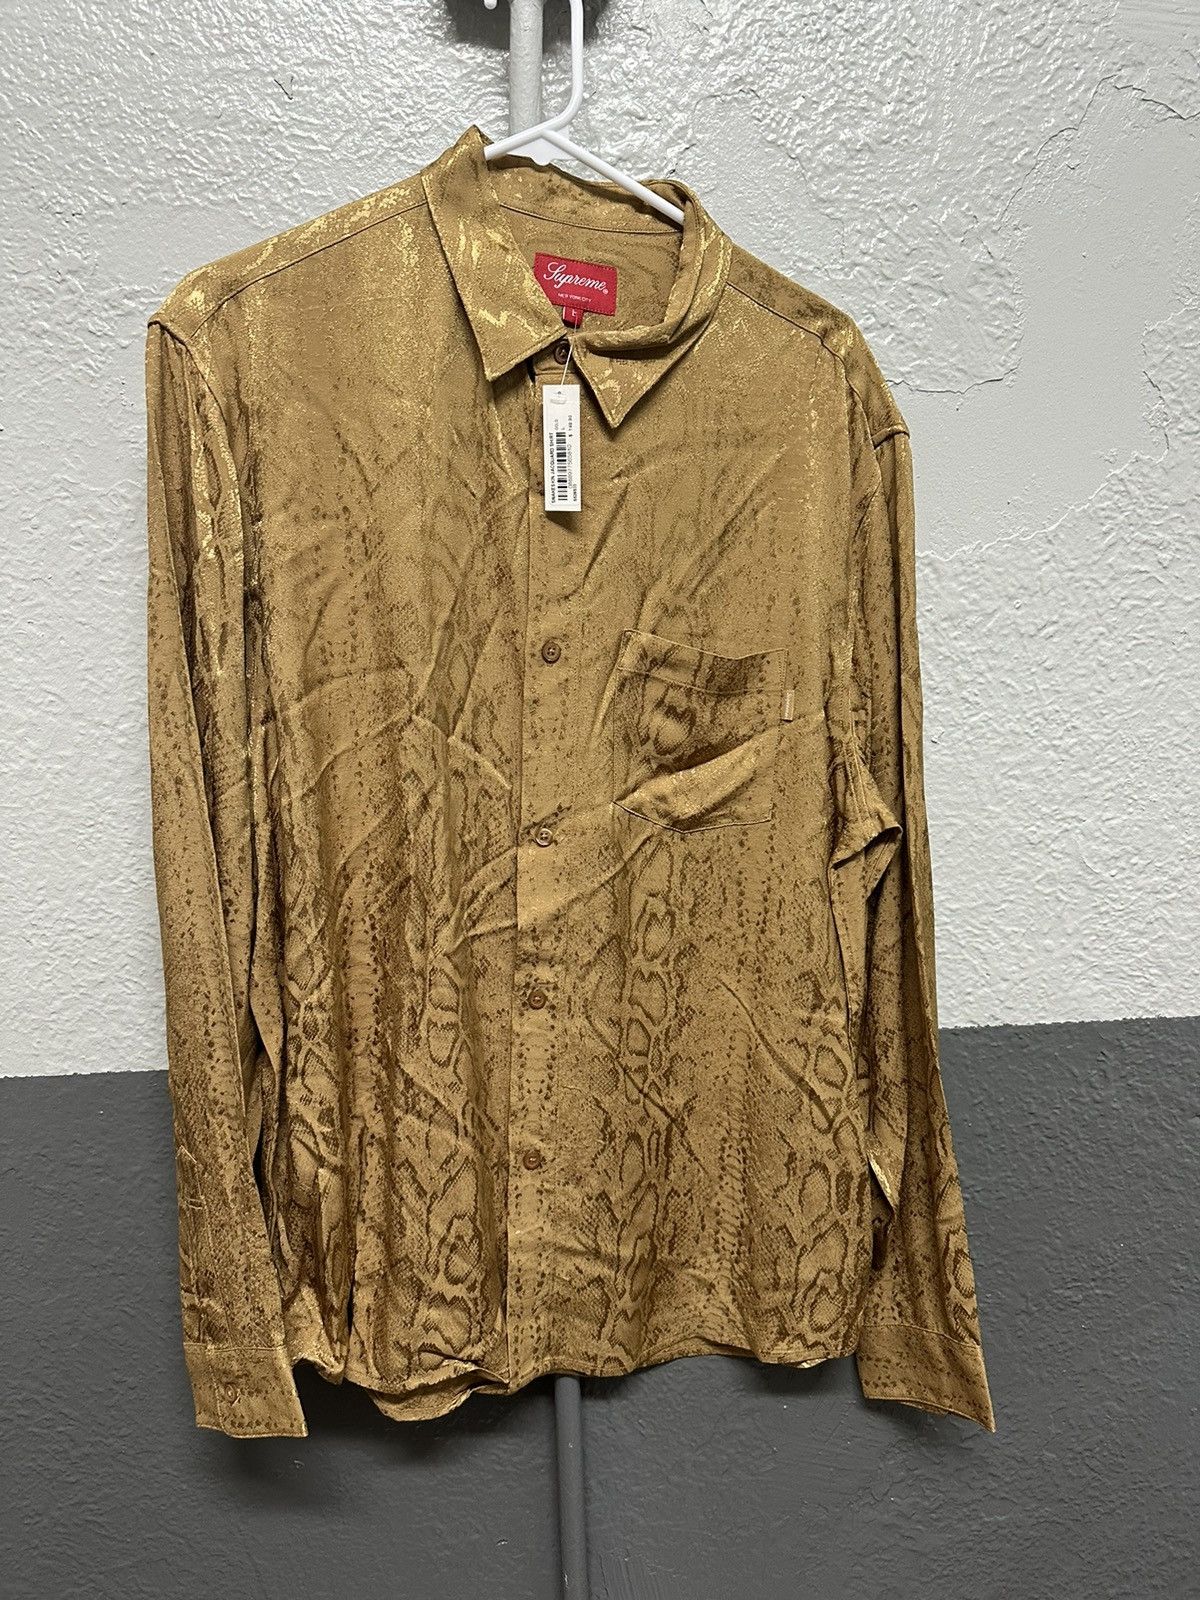 Supreme SUPREME snakeskin jacquard shirt GOLD | Grailed